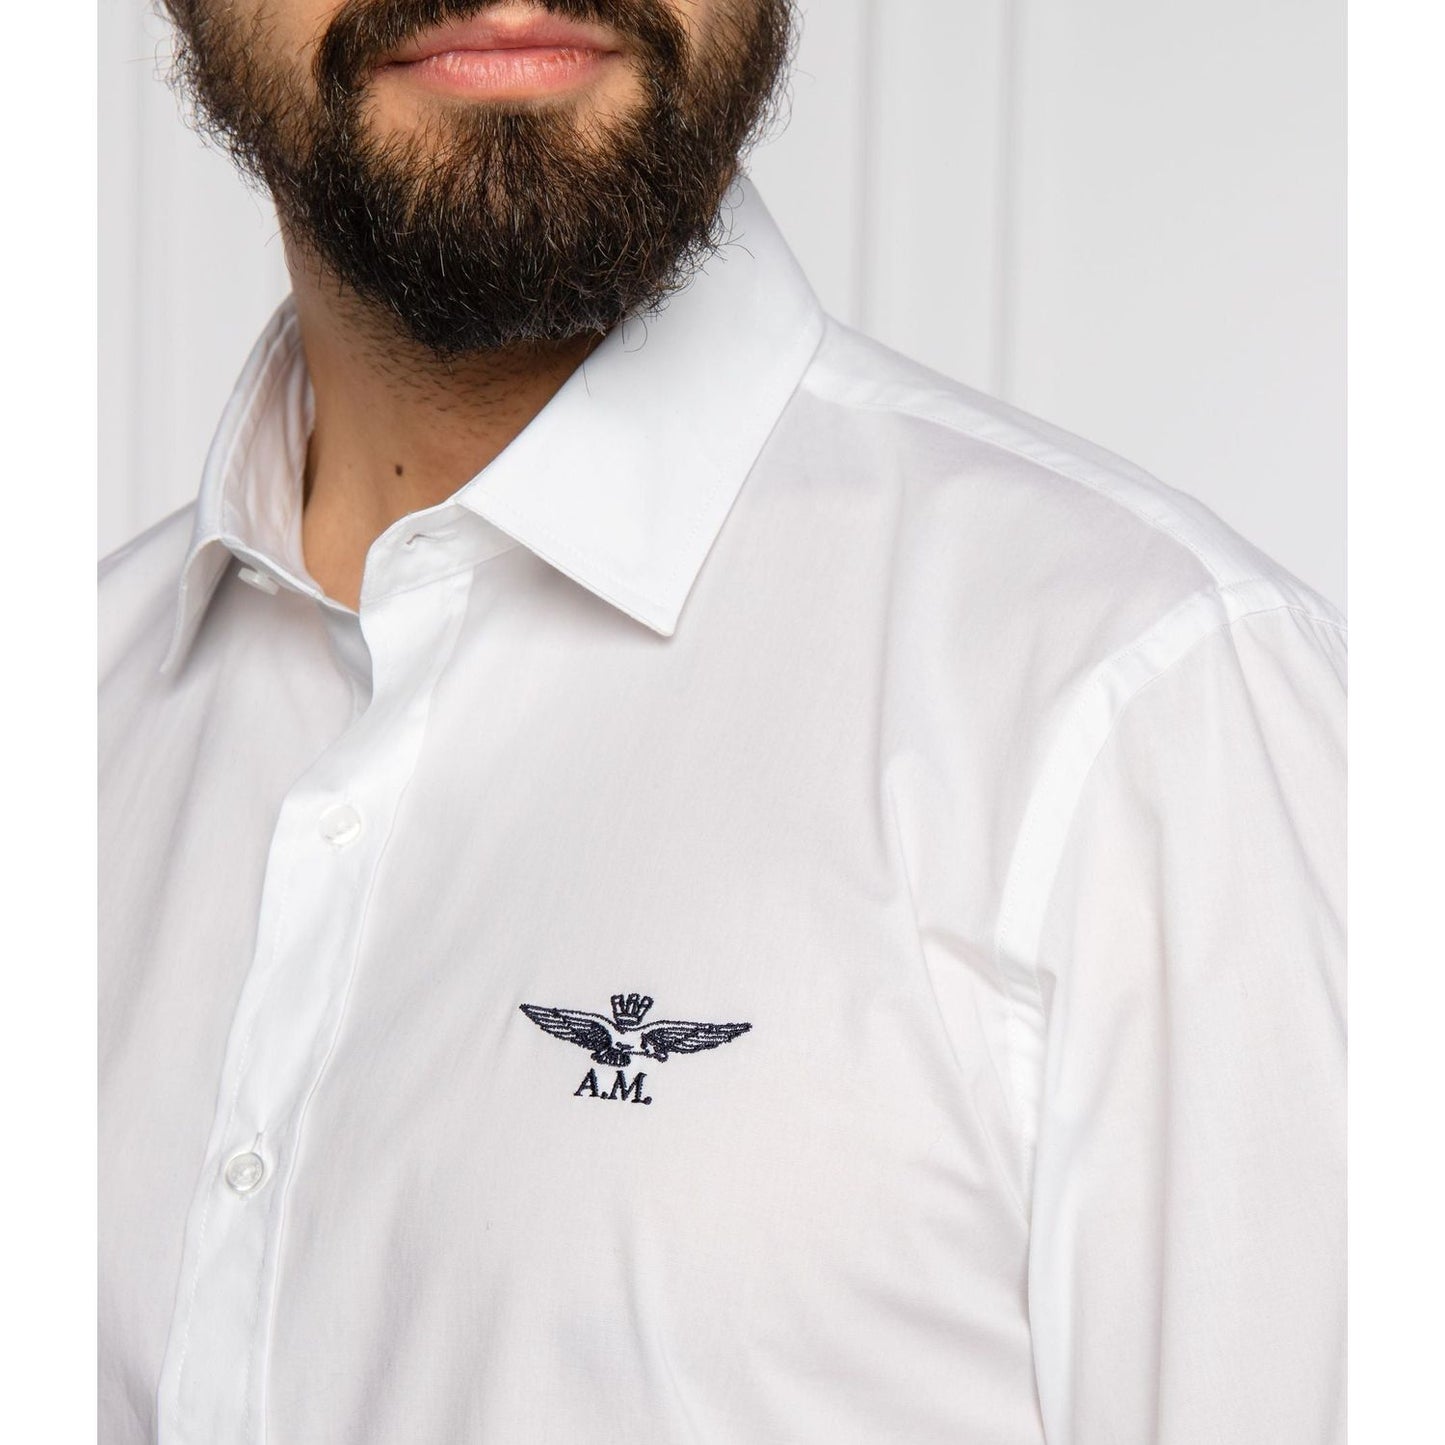 Aeronautica Militare Slim Fit White Cotton Shirt with Eagle Logo white-cotton-shirt-12 product-7878-1905879798-5-5821c03c-999.jpg